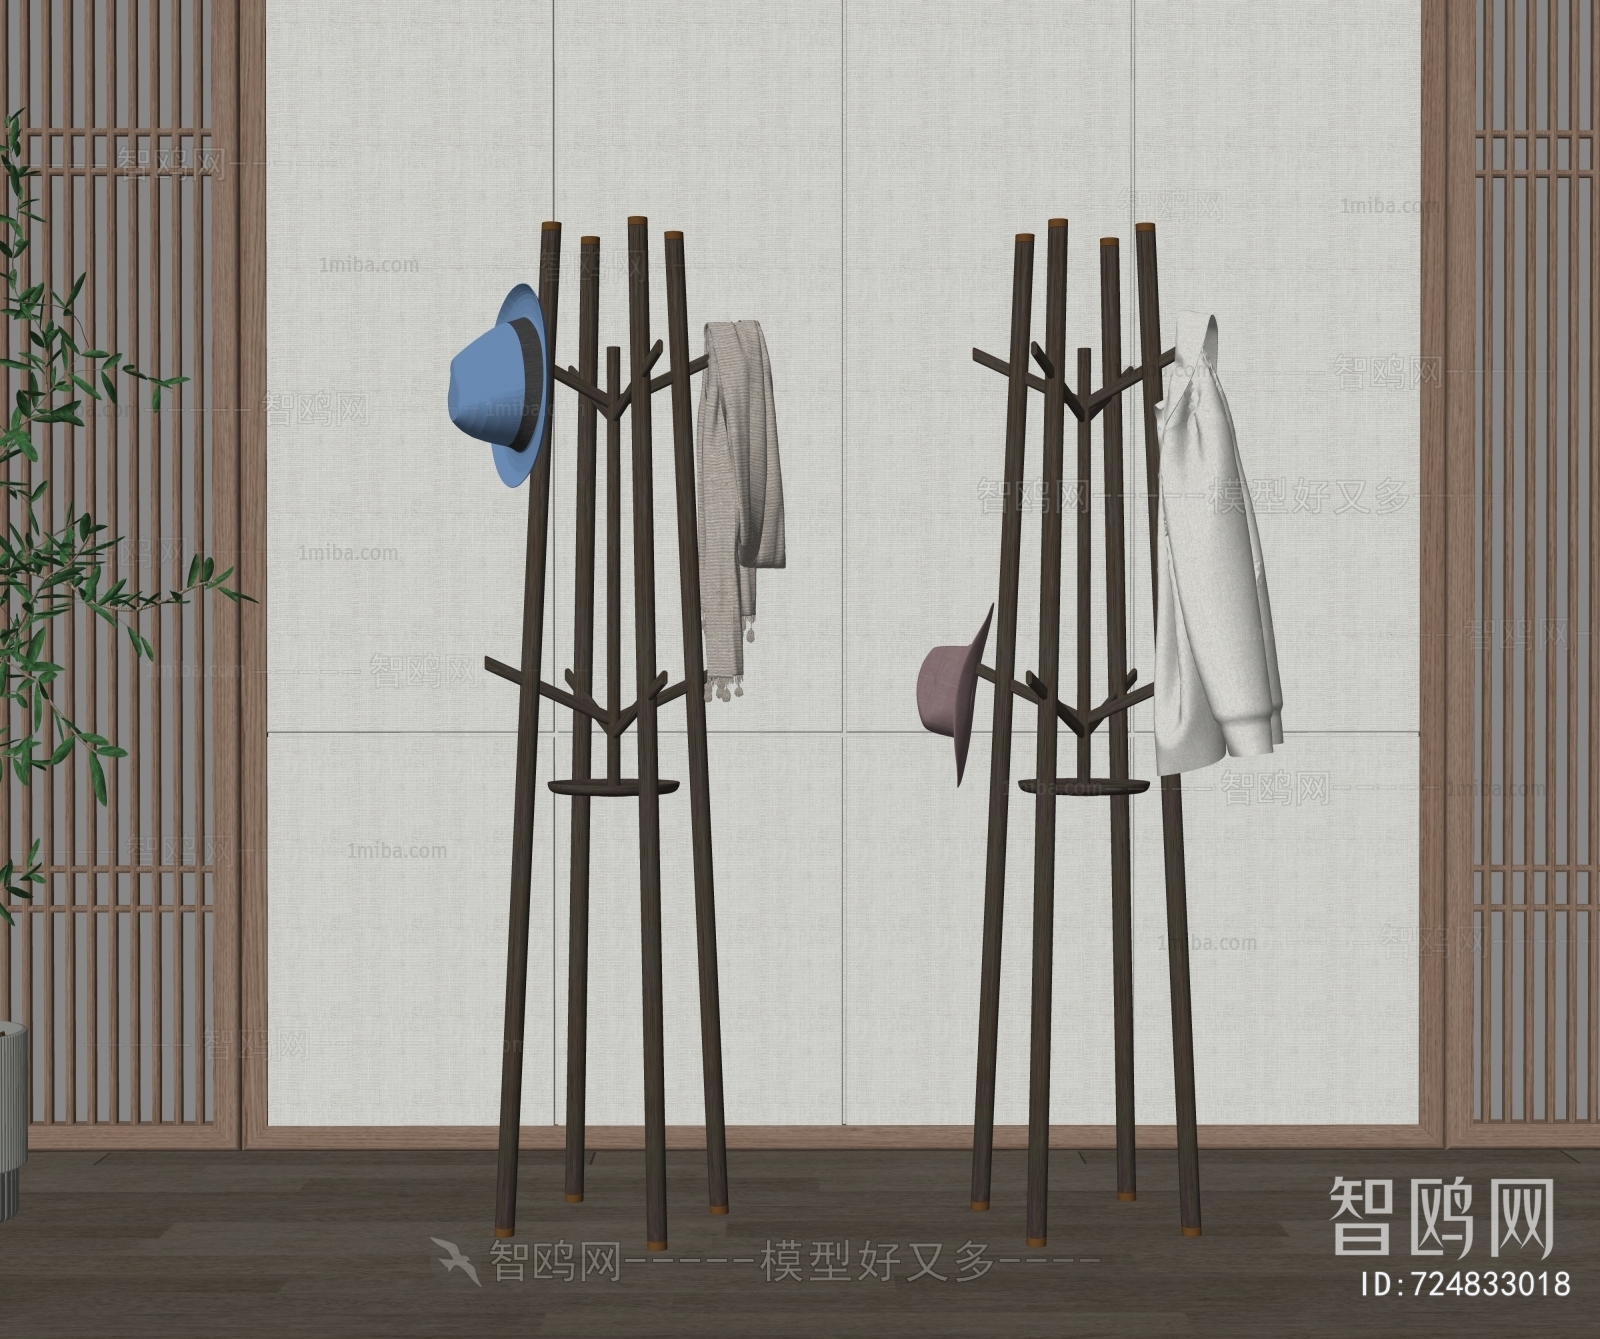 New Chinese Style Coat Hanger